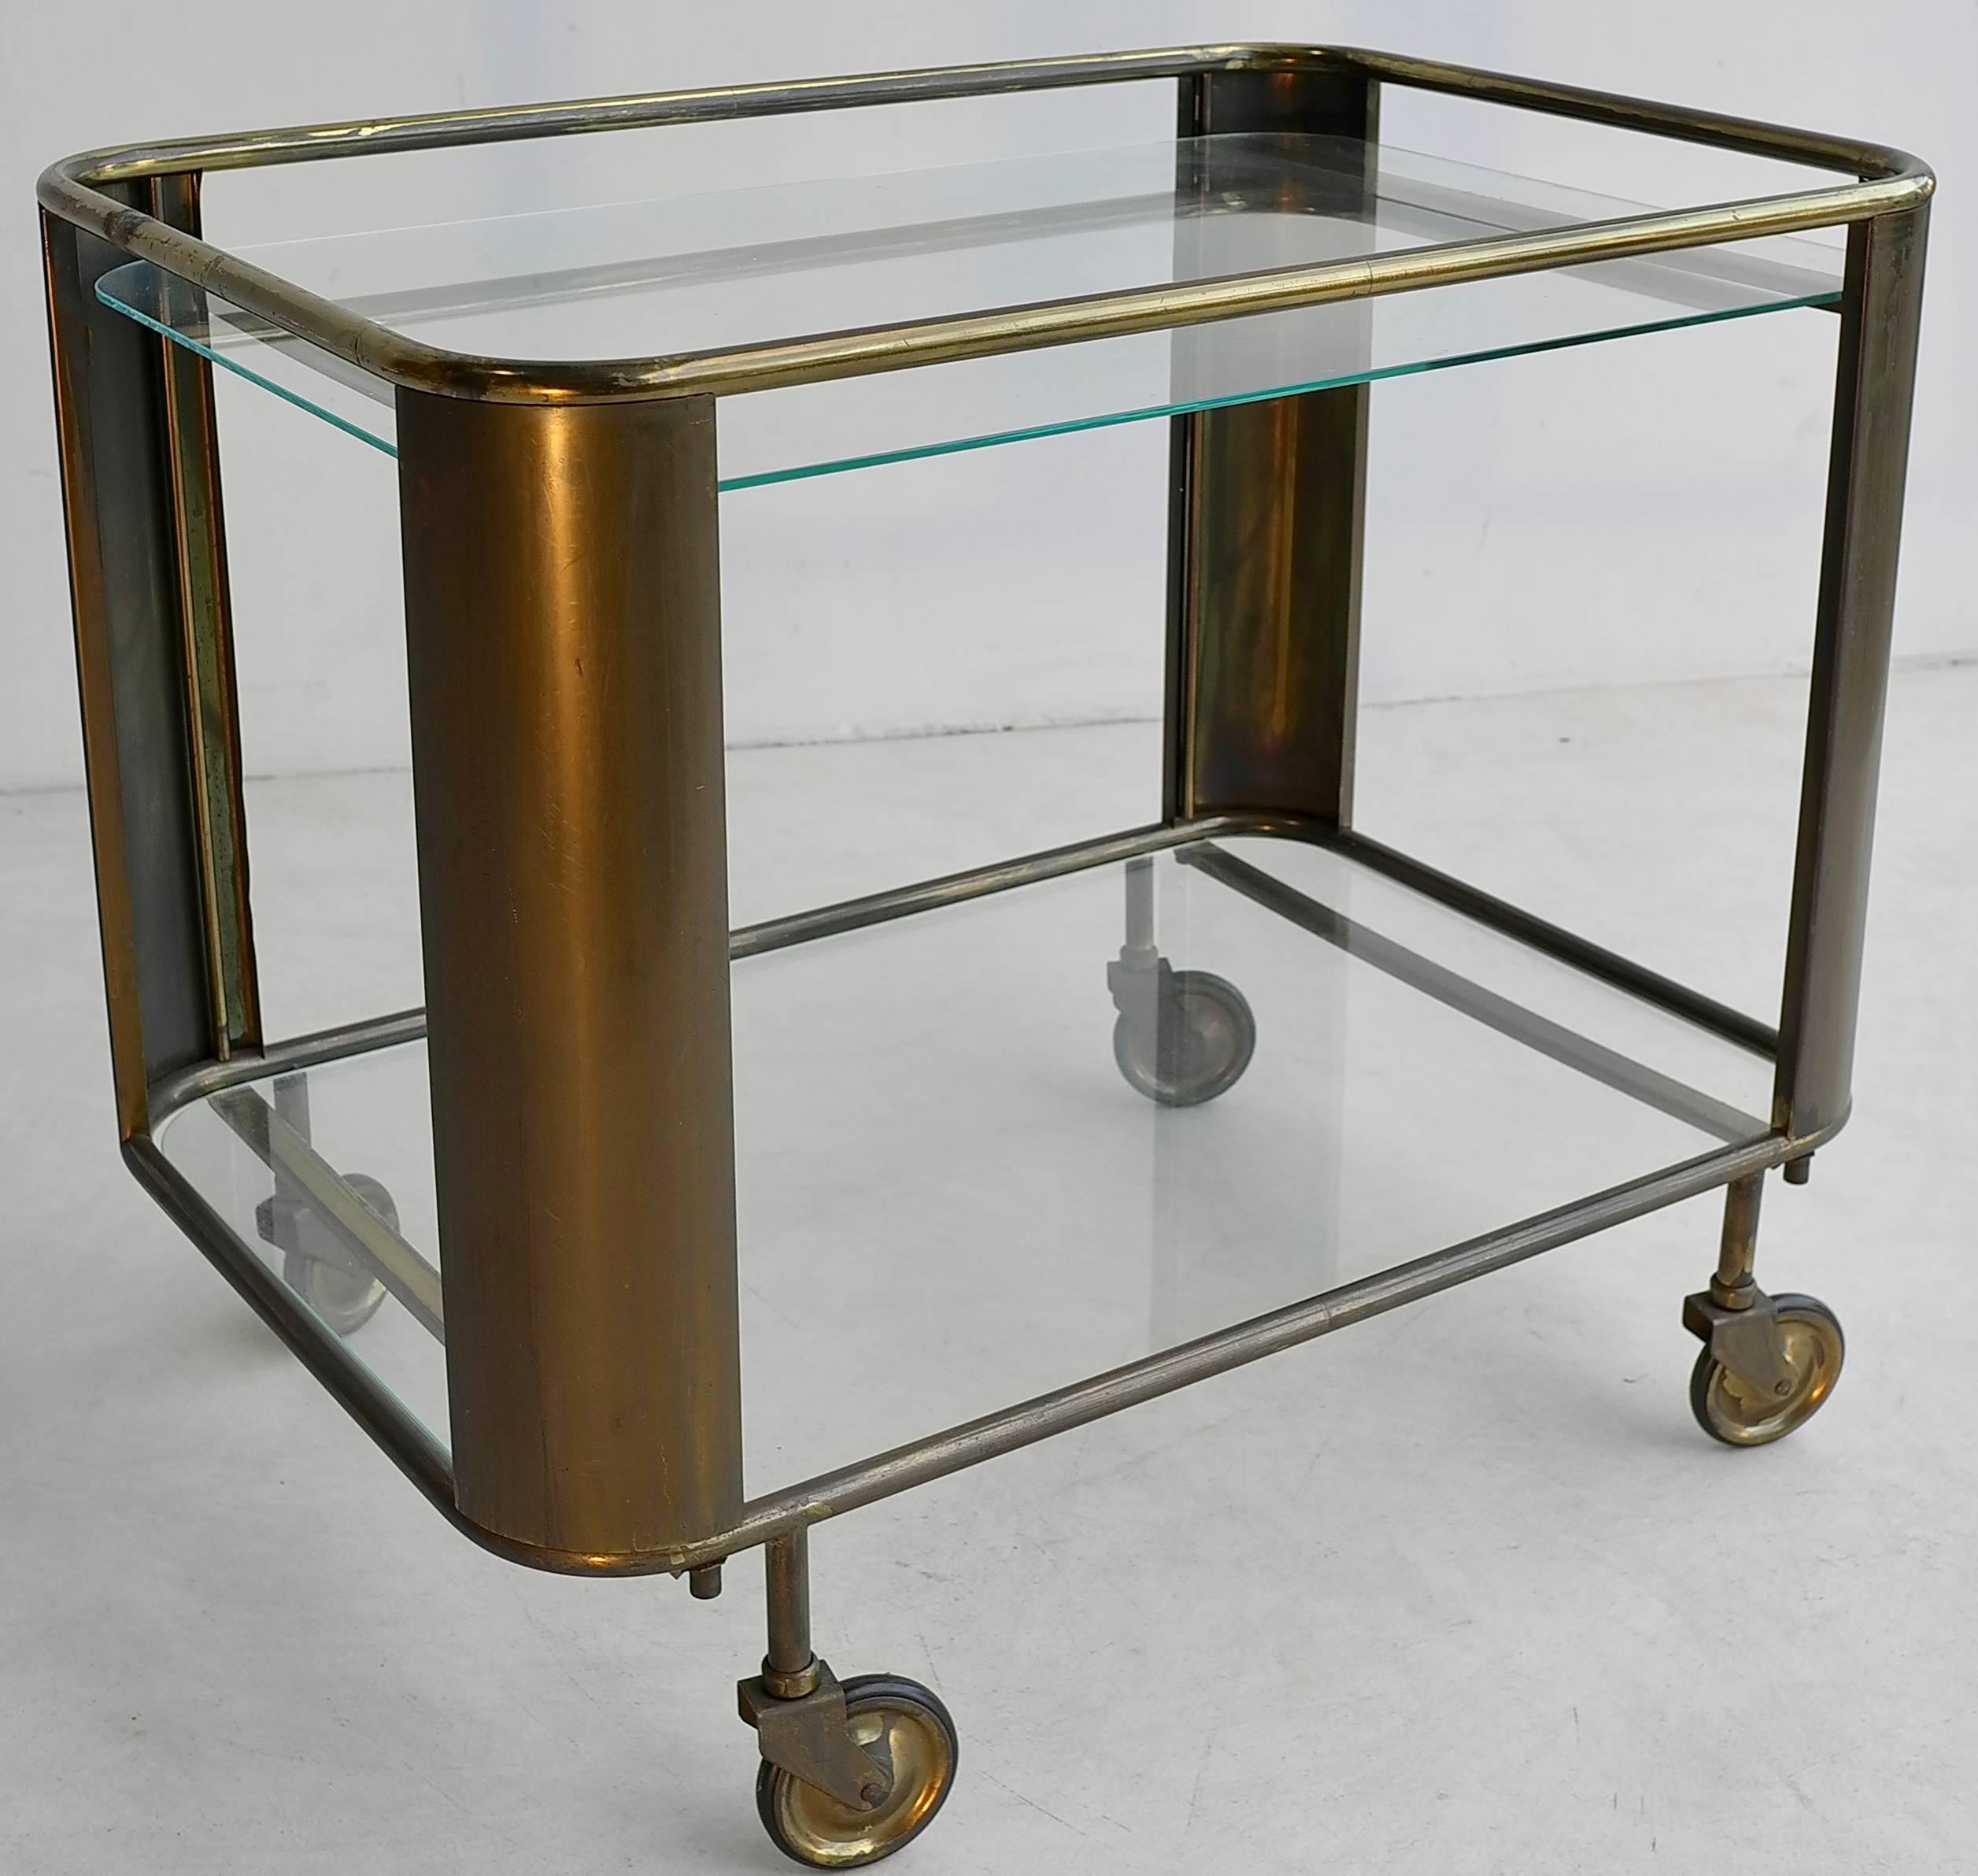 Mid-Century Modern brass and glass bar cart, France, 1950s.